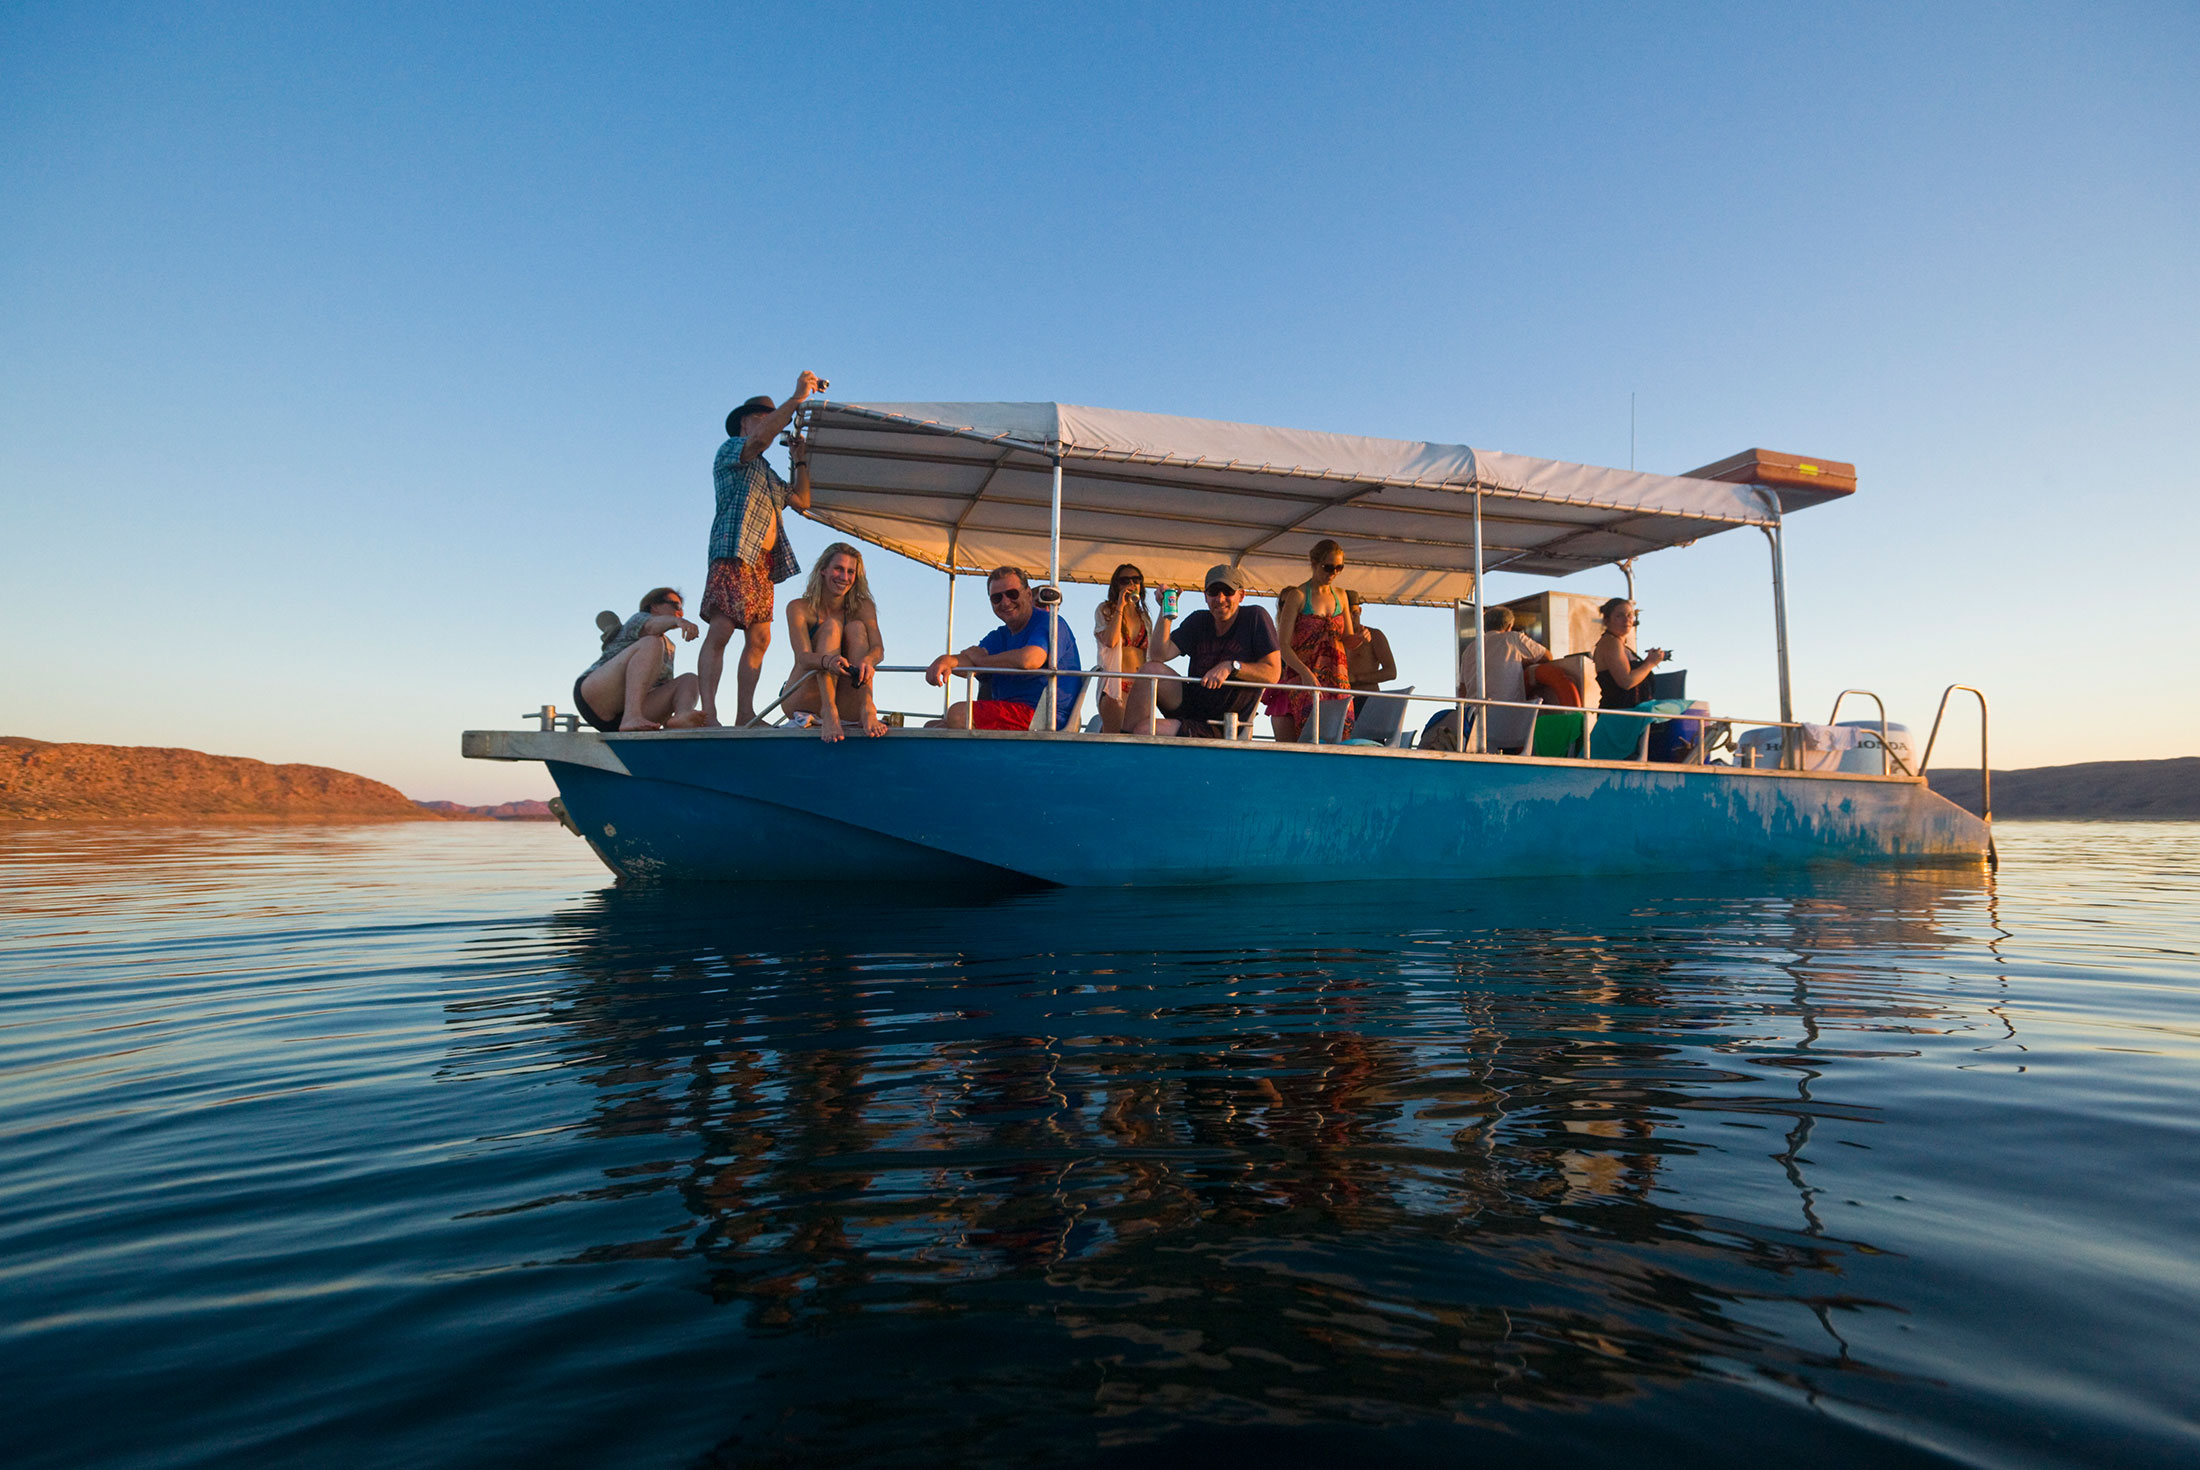 Tour group on a boat at Lake Argyle, Western Australia